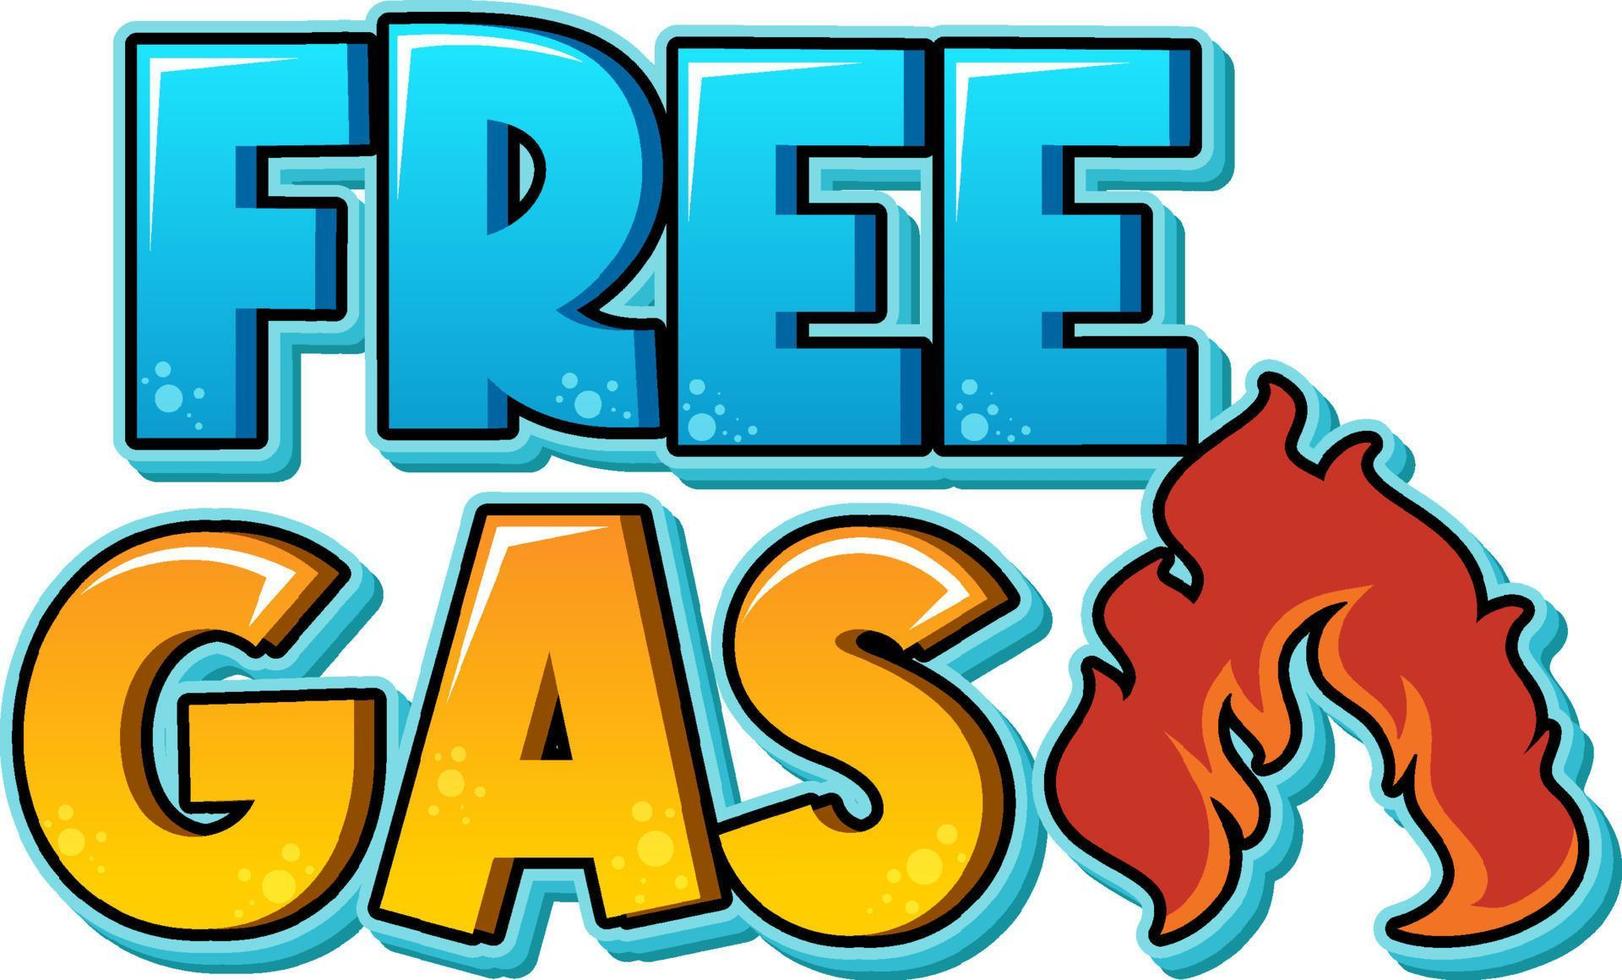 gratis gas cartoon woord logo ontwerp vector